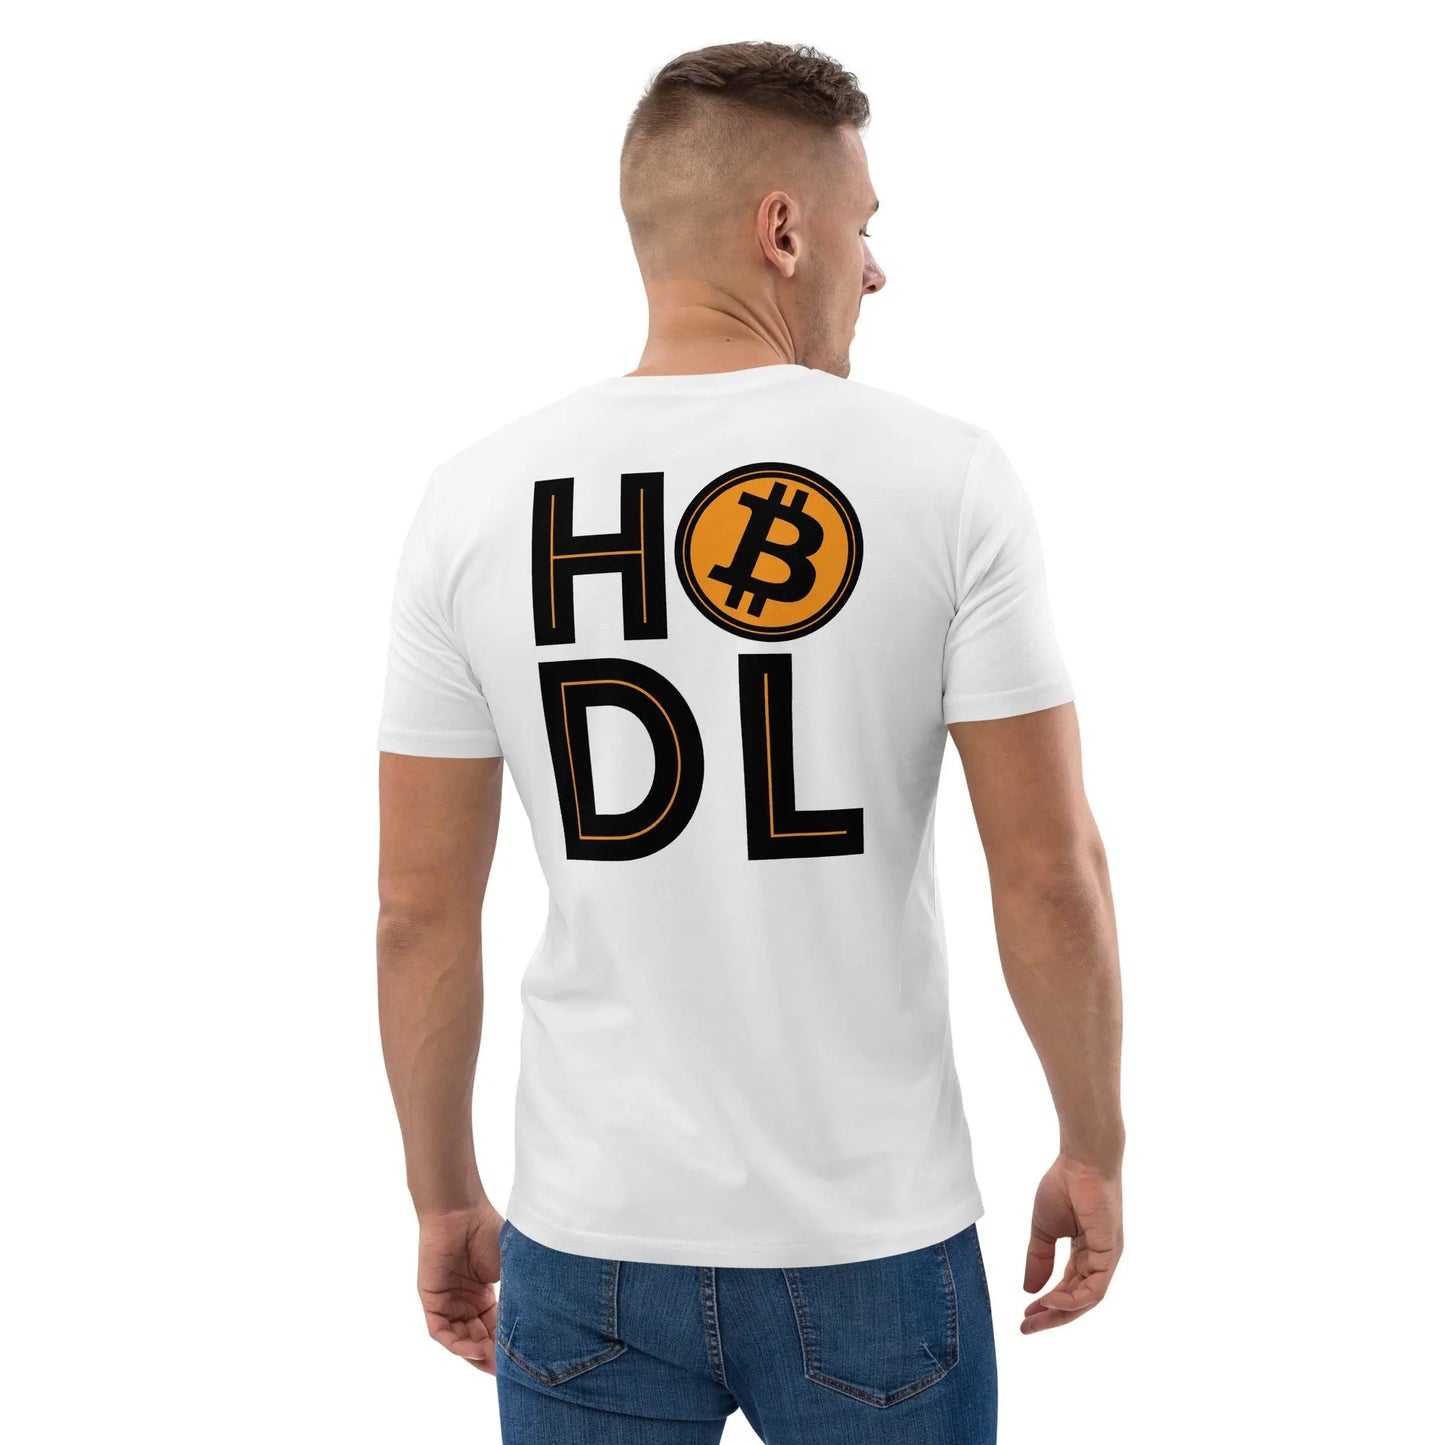 HODL - Premium Unisex Organic Cotton Bitcoin T-shirt White Color